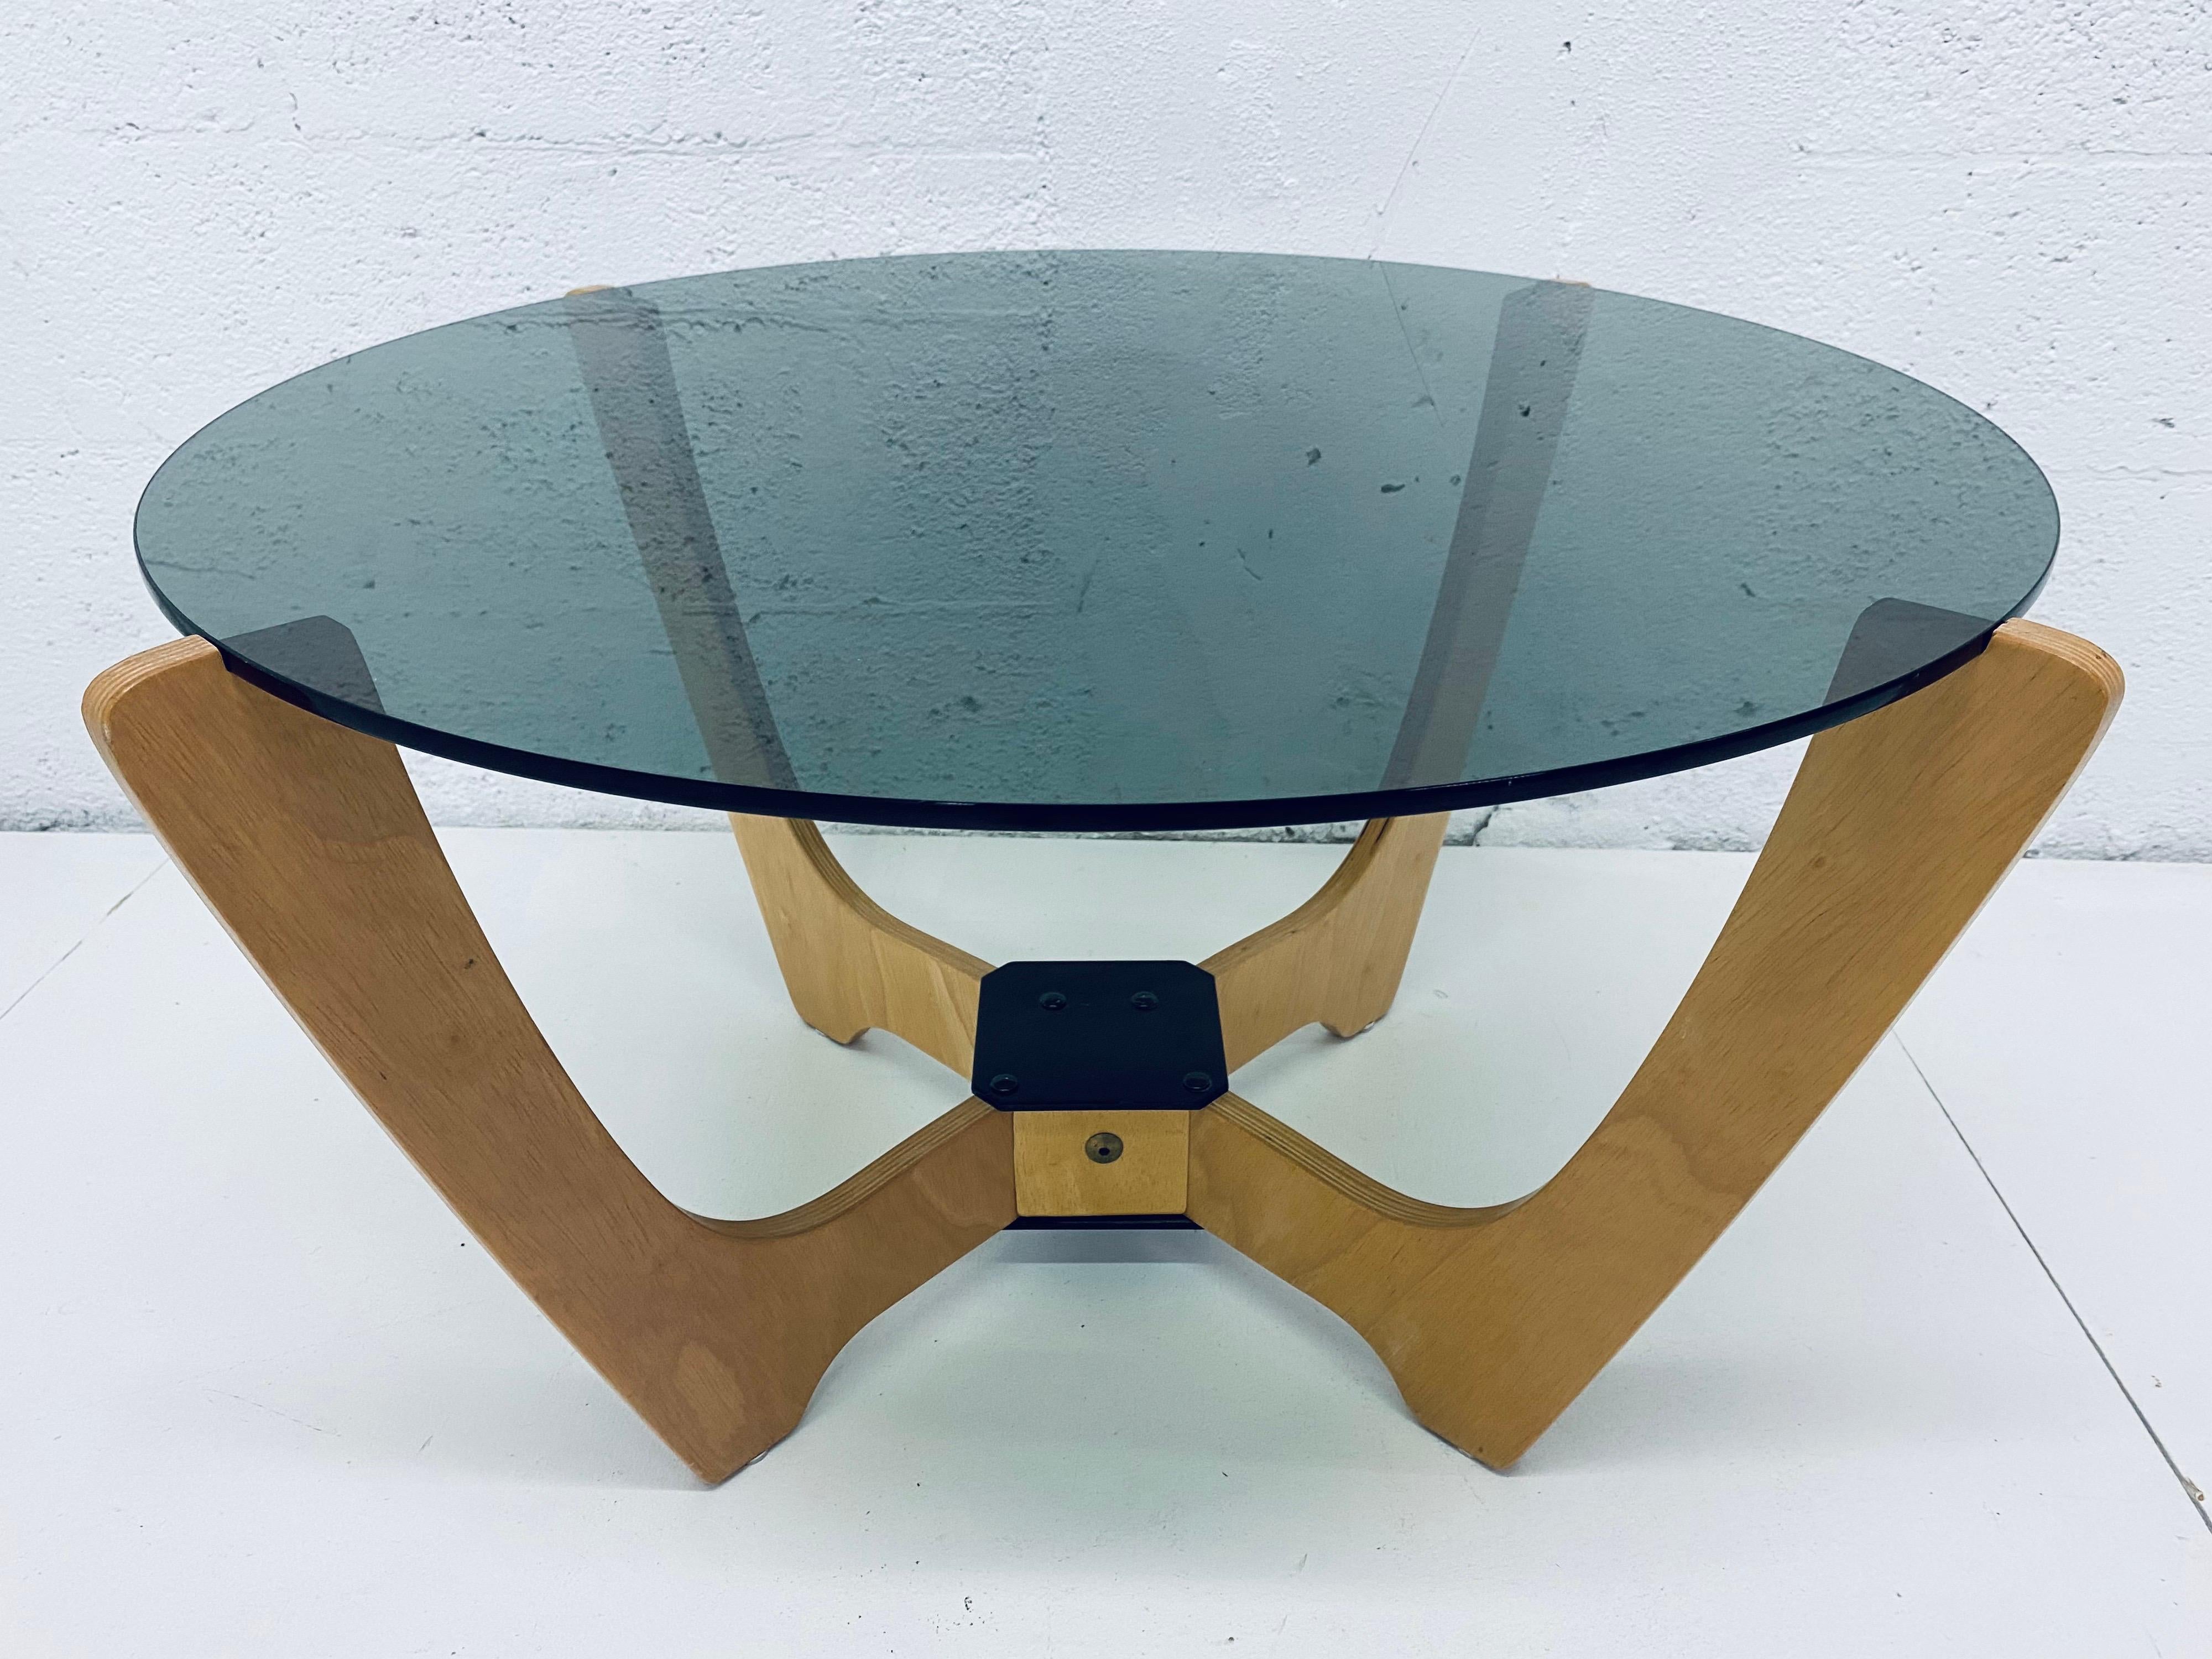 European Odd Knutsen Midcentury Danish Modern Beech Wood and Glass Top Coffee Table For Sale